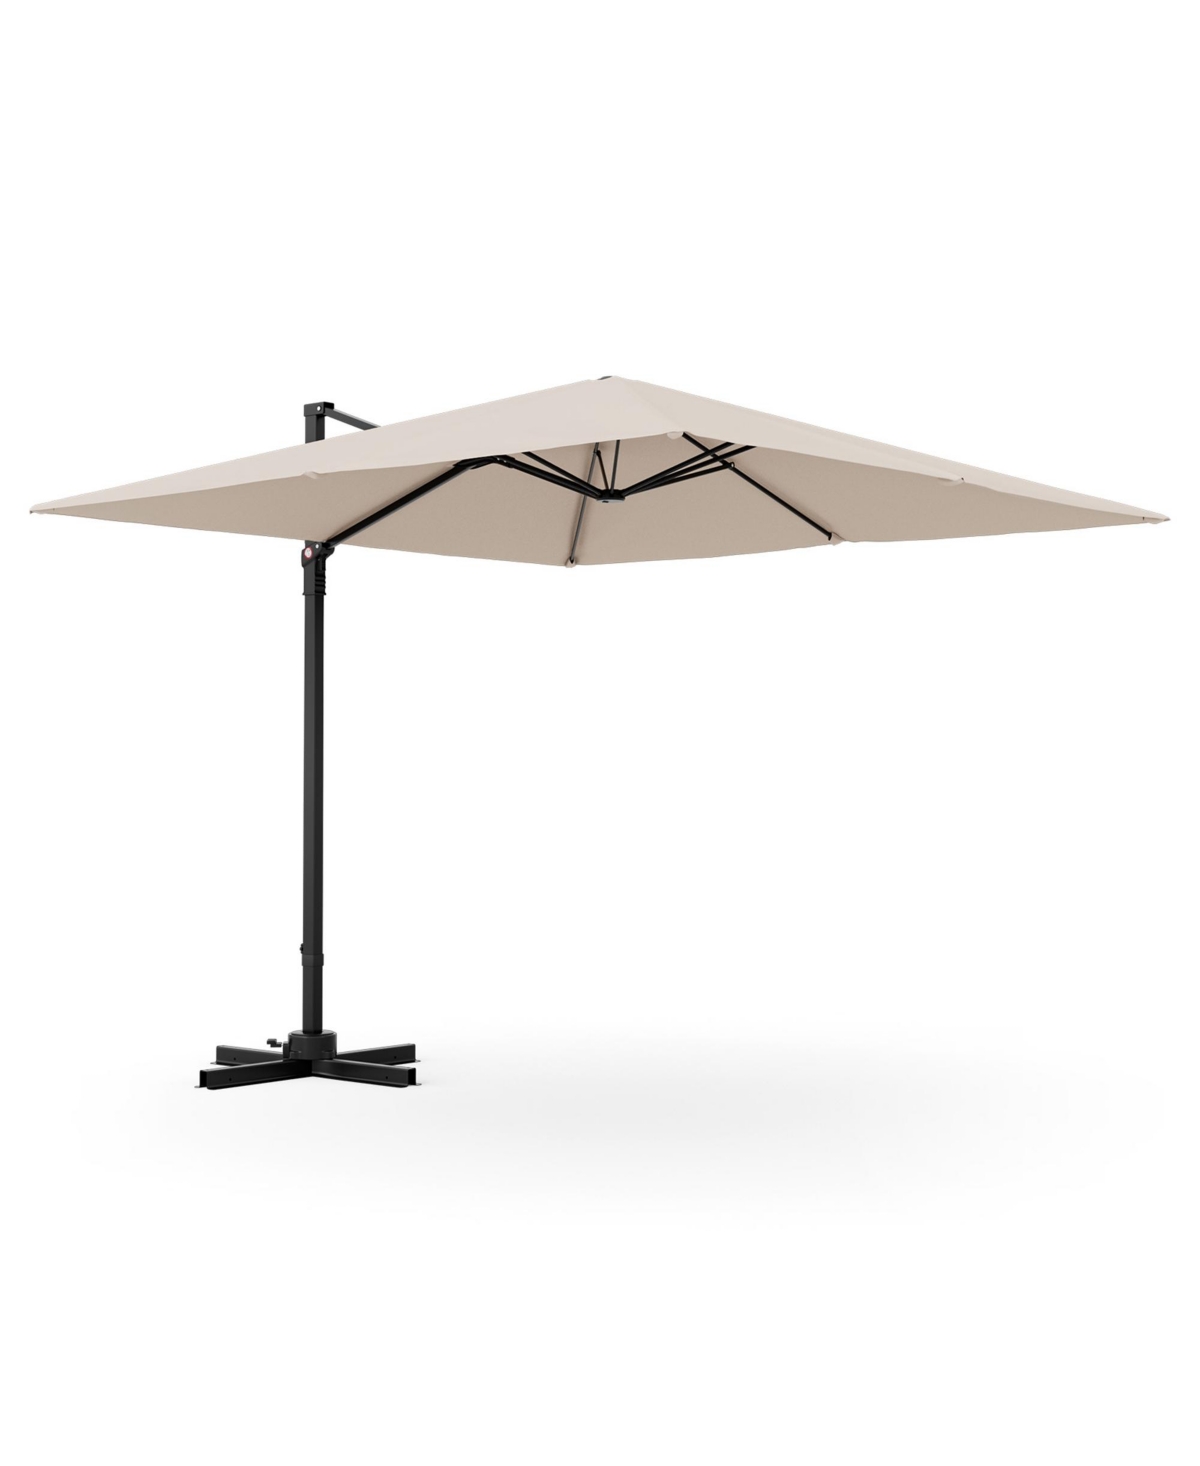 Patio 9.5FT Square Cantilever Offset Hanging Umbrella 2-Tier 360Â° Outdoor - Beige